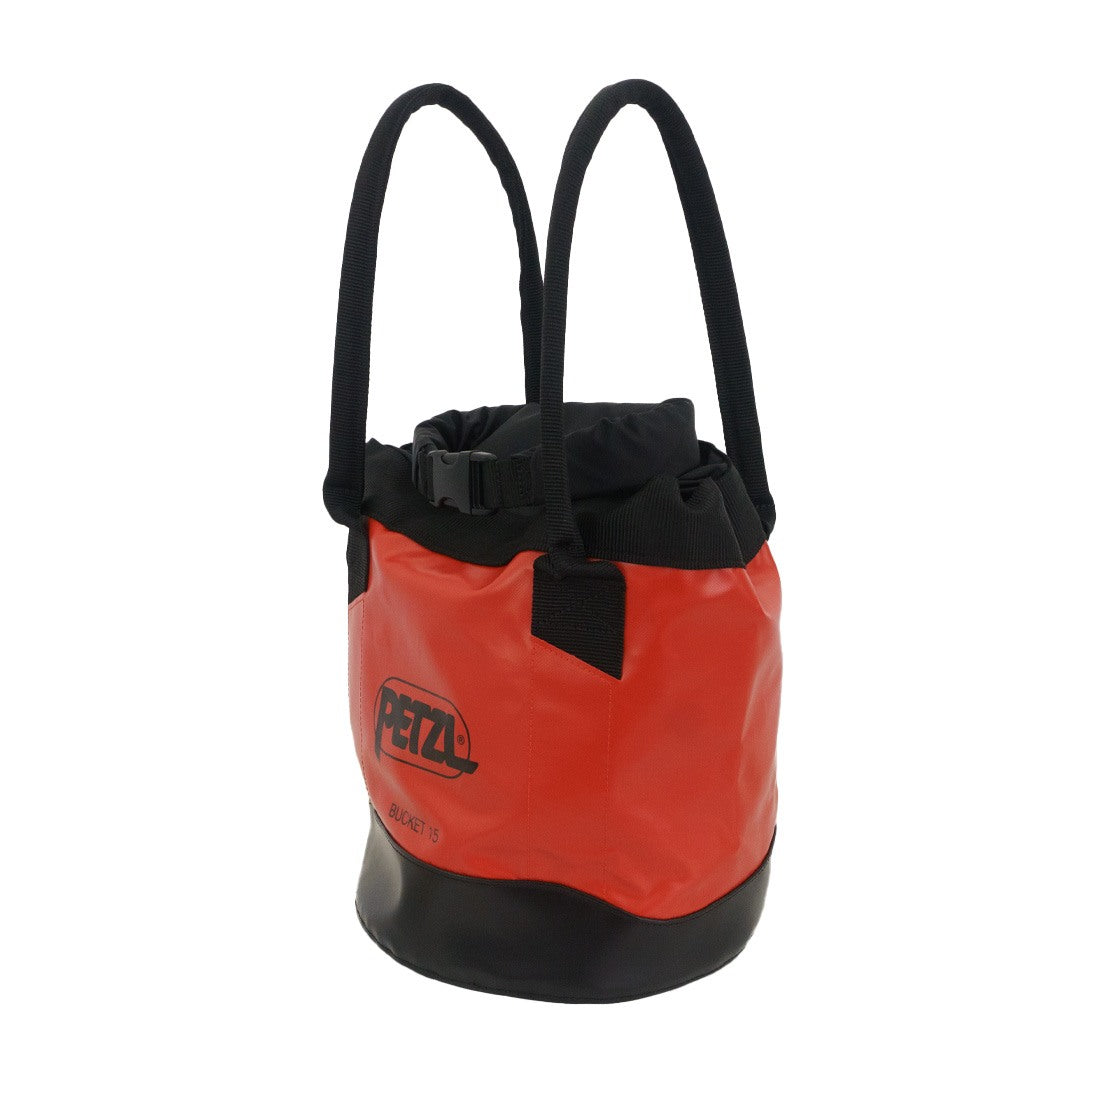 Petzl Bucket 30L Rope Bag | Durable and Spacious Rope Storage